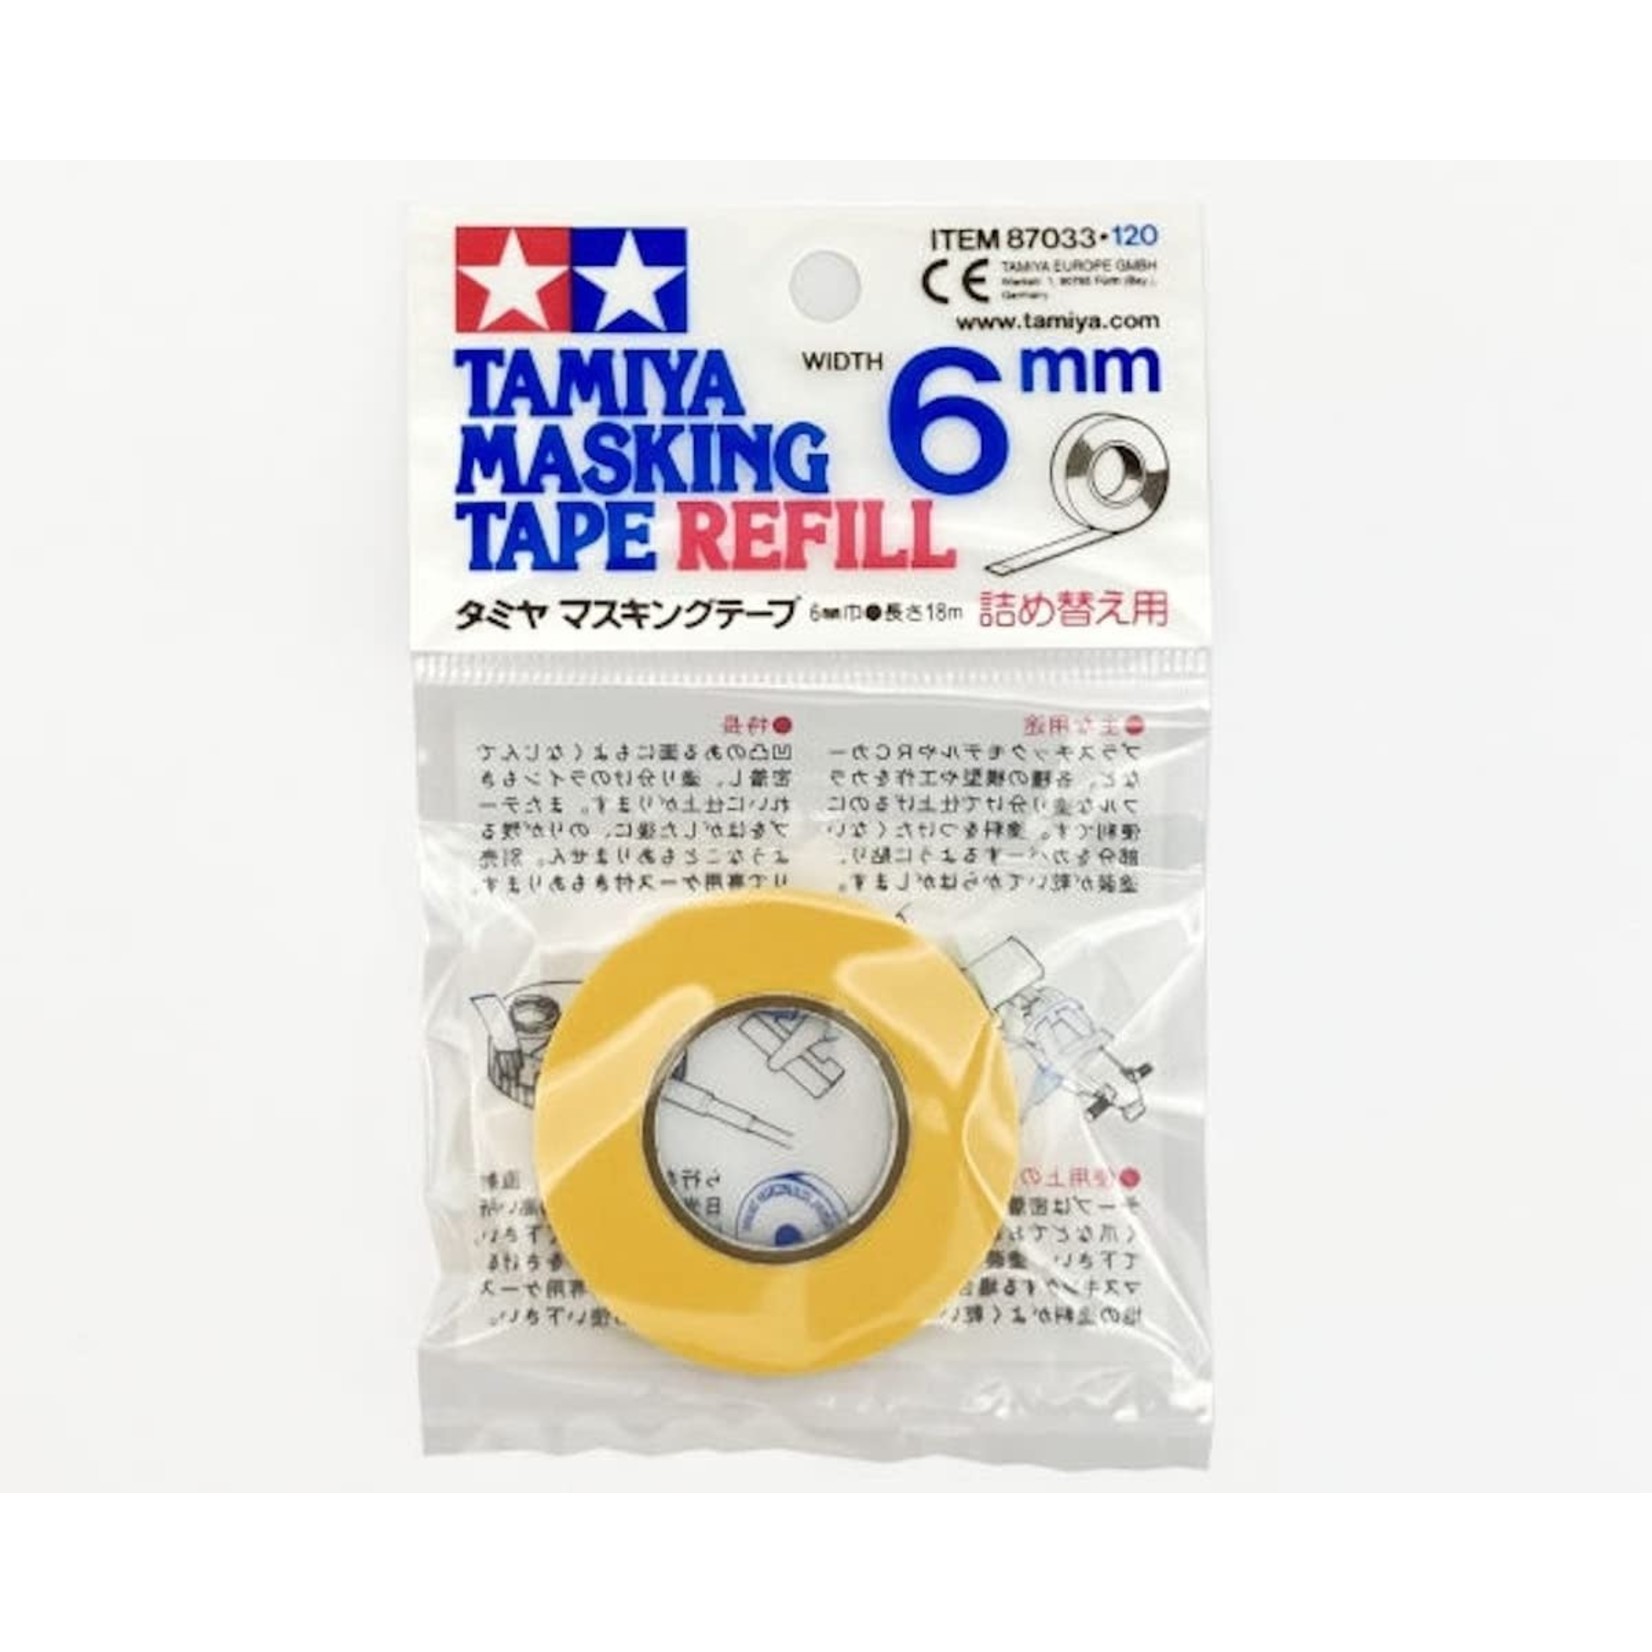 Tamiya Masking Tape Refill, 6mm